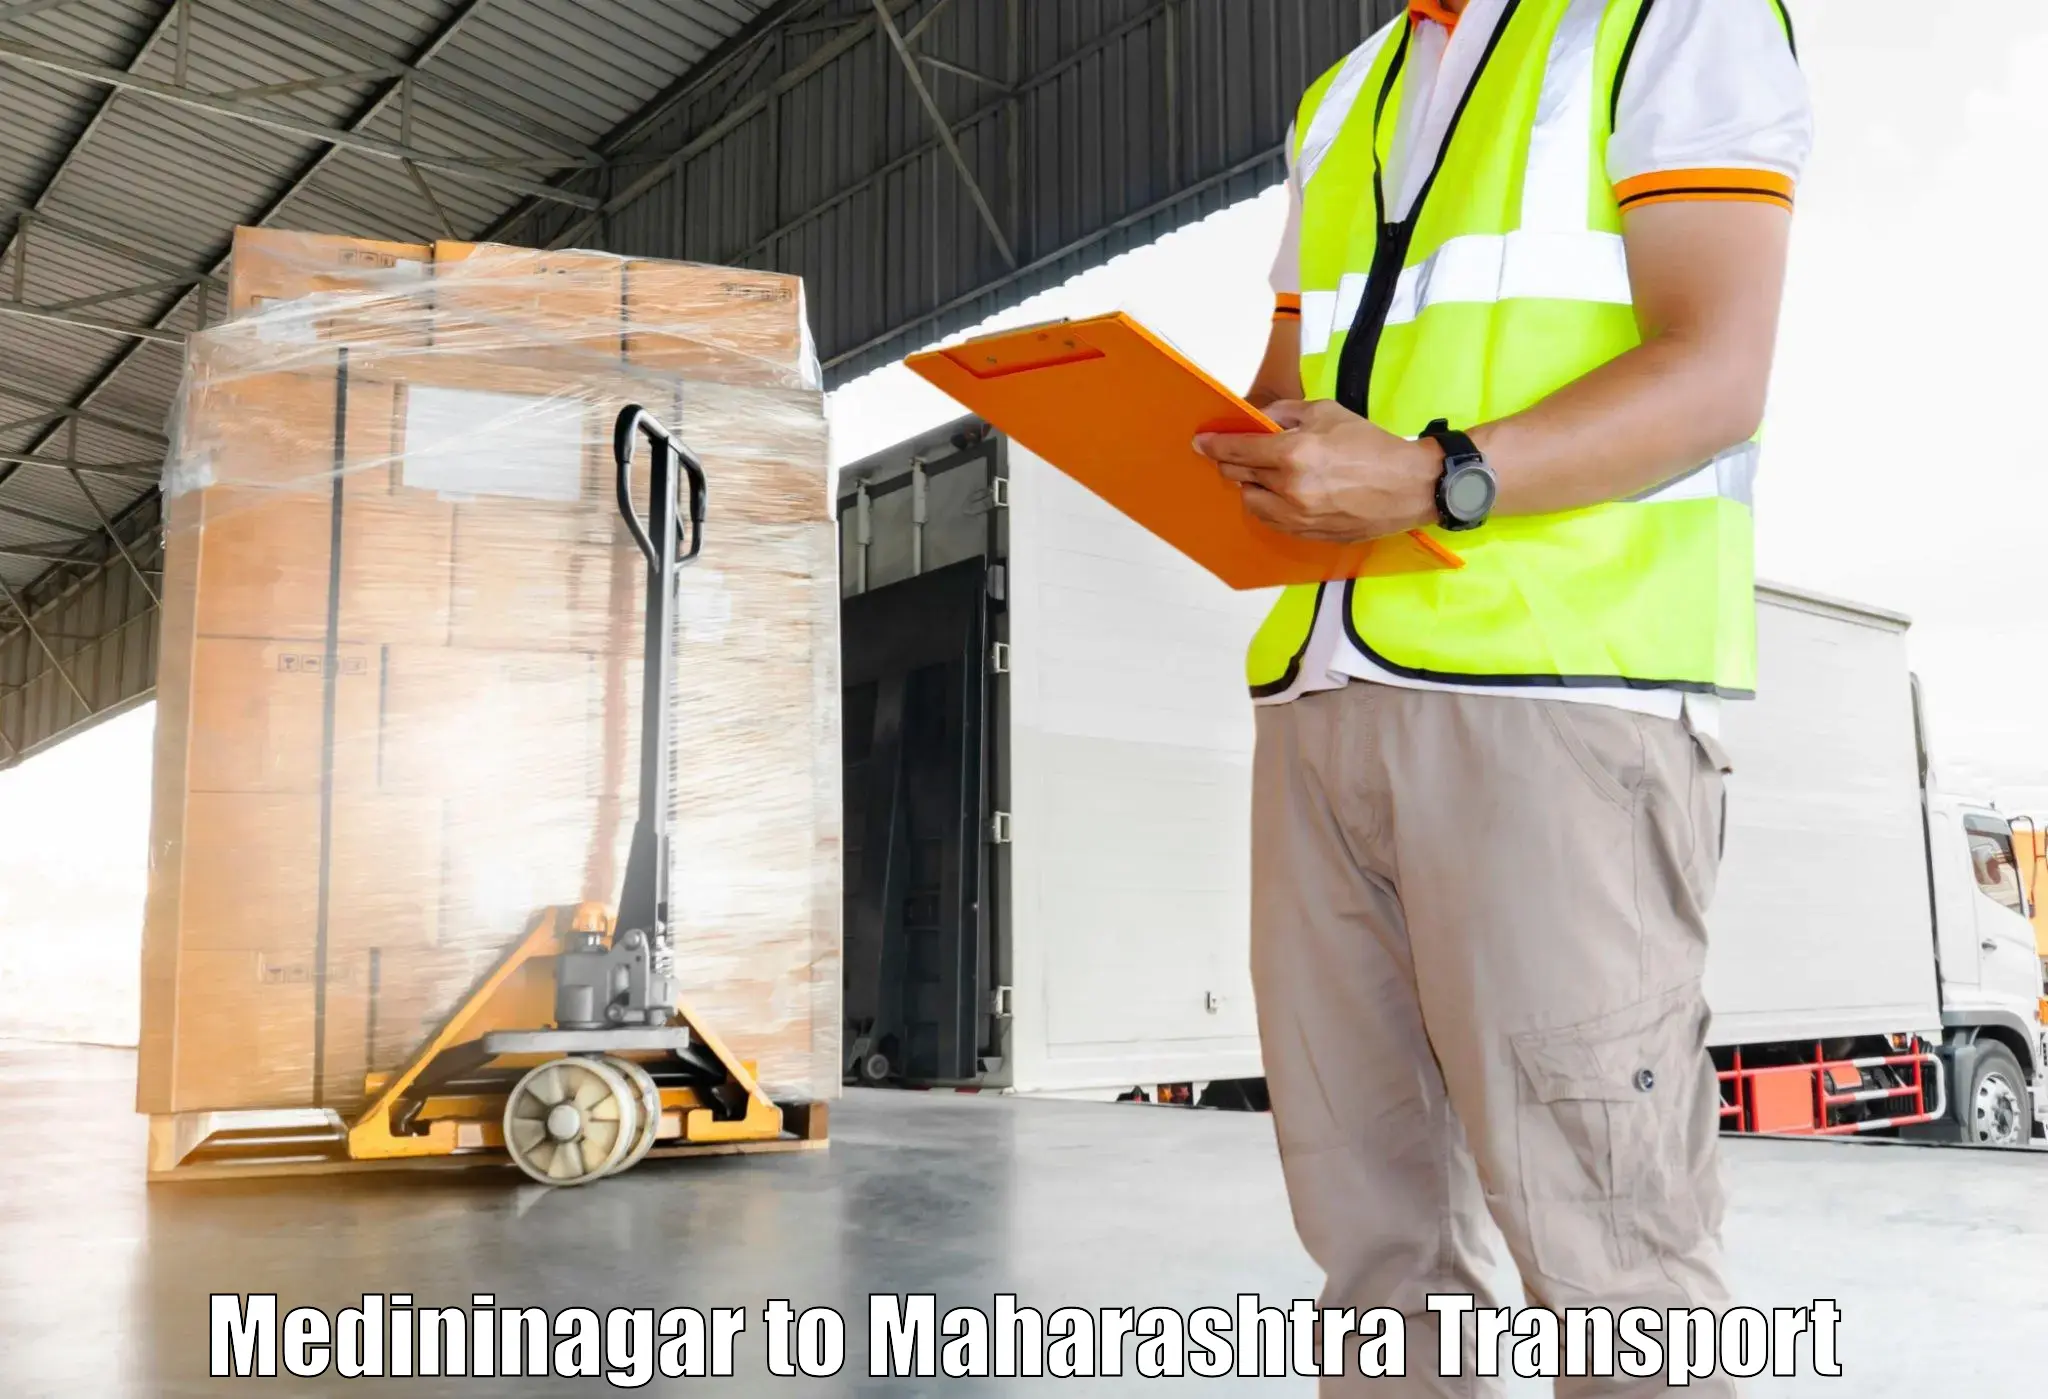 Truck transport companies in India Medininagar to Lanja